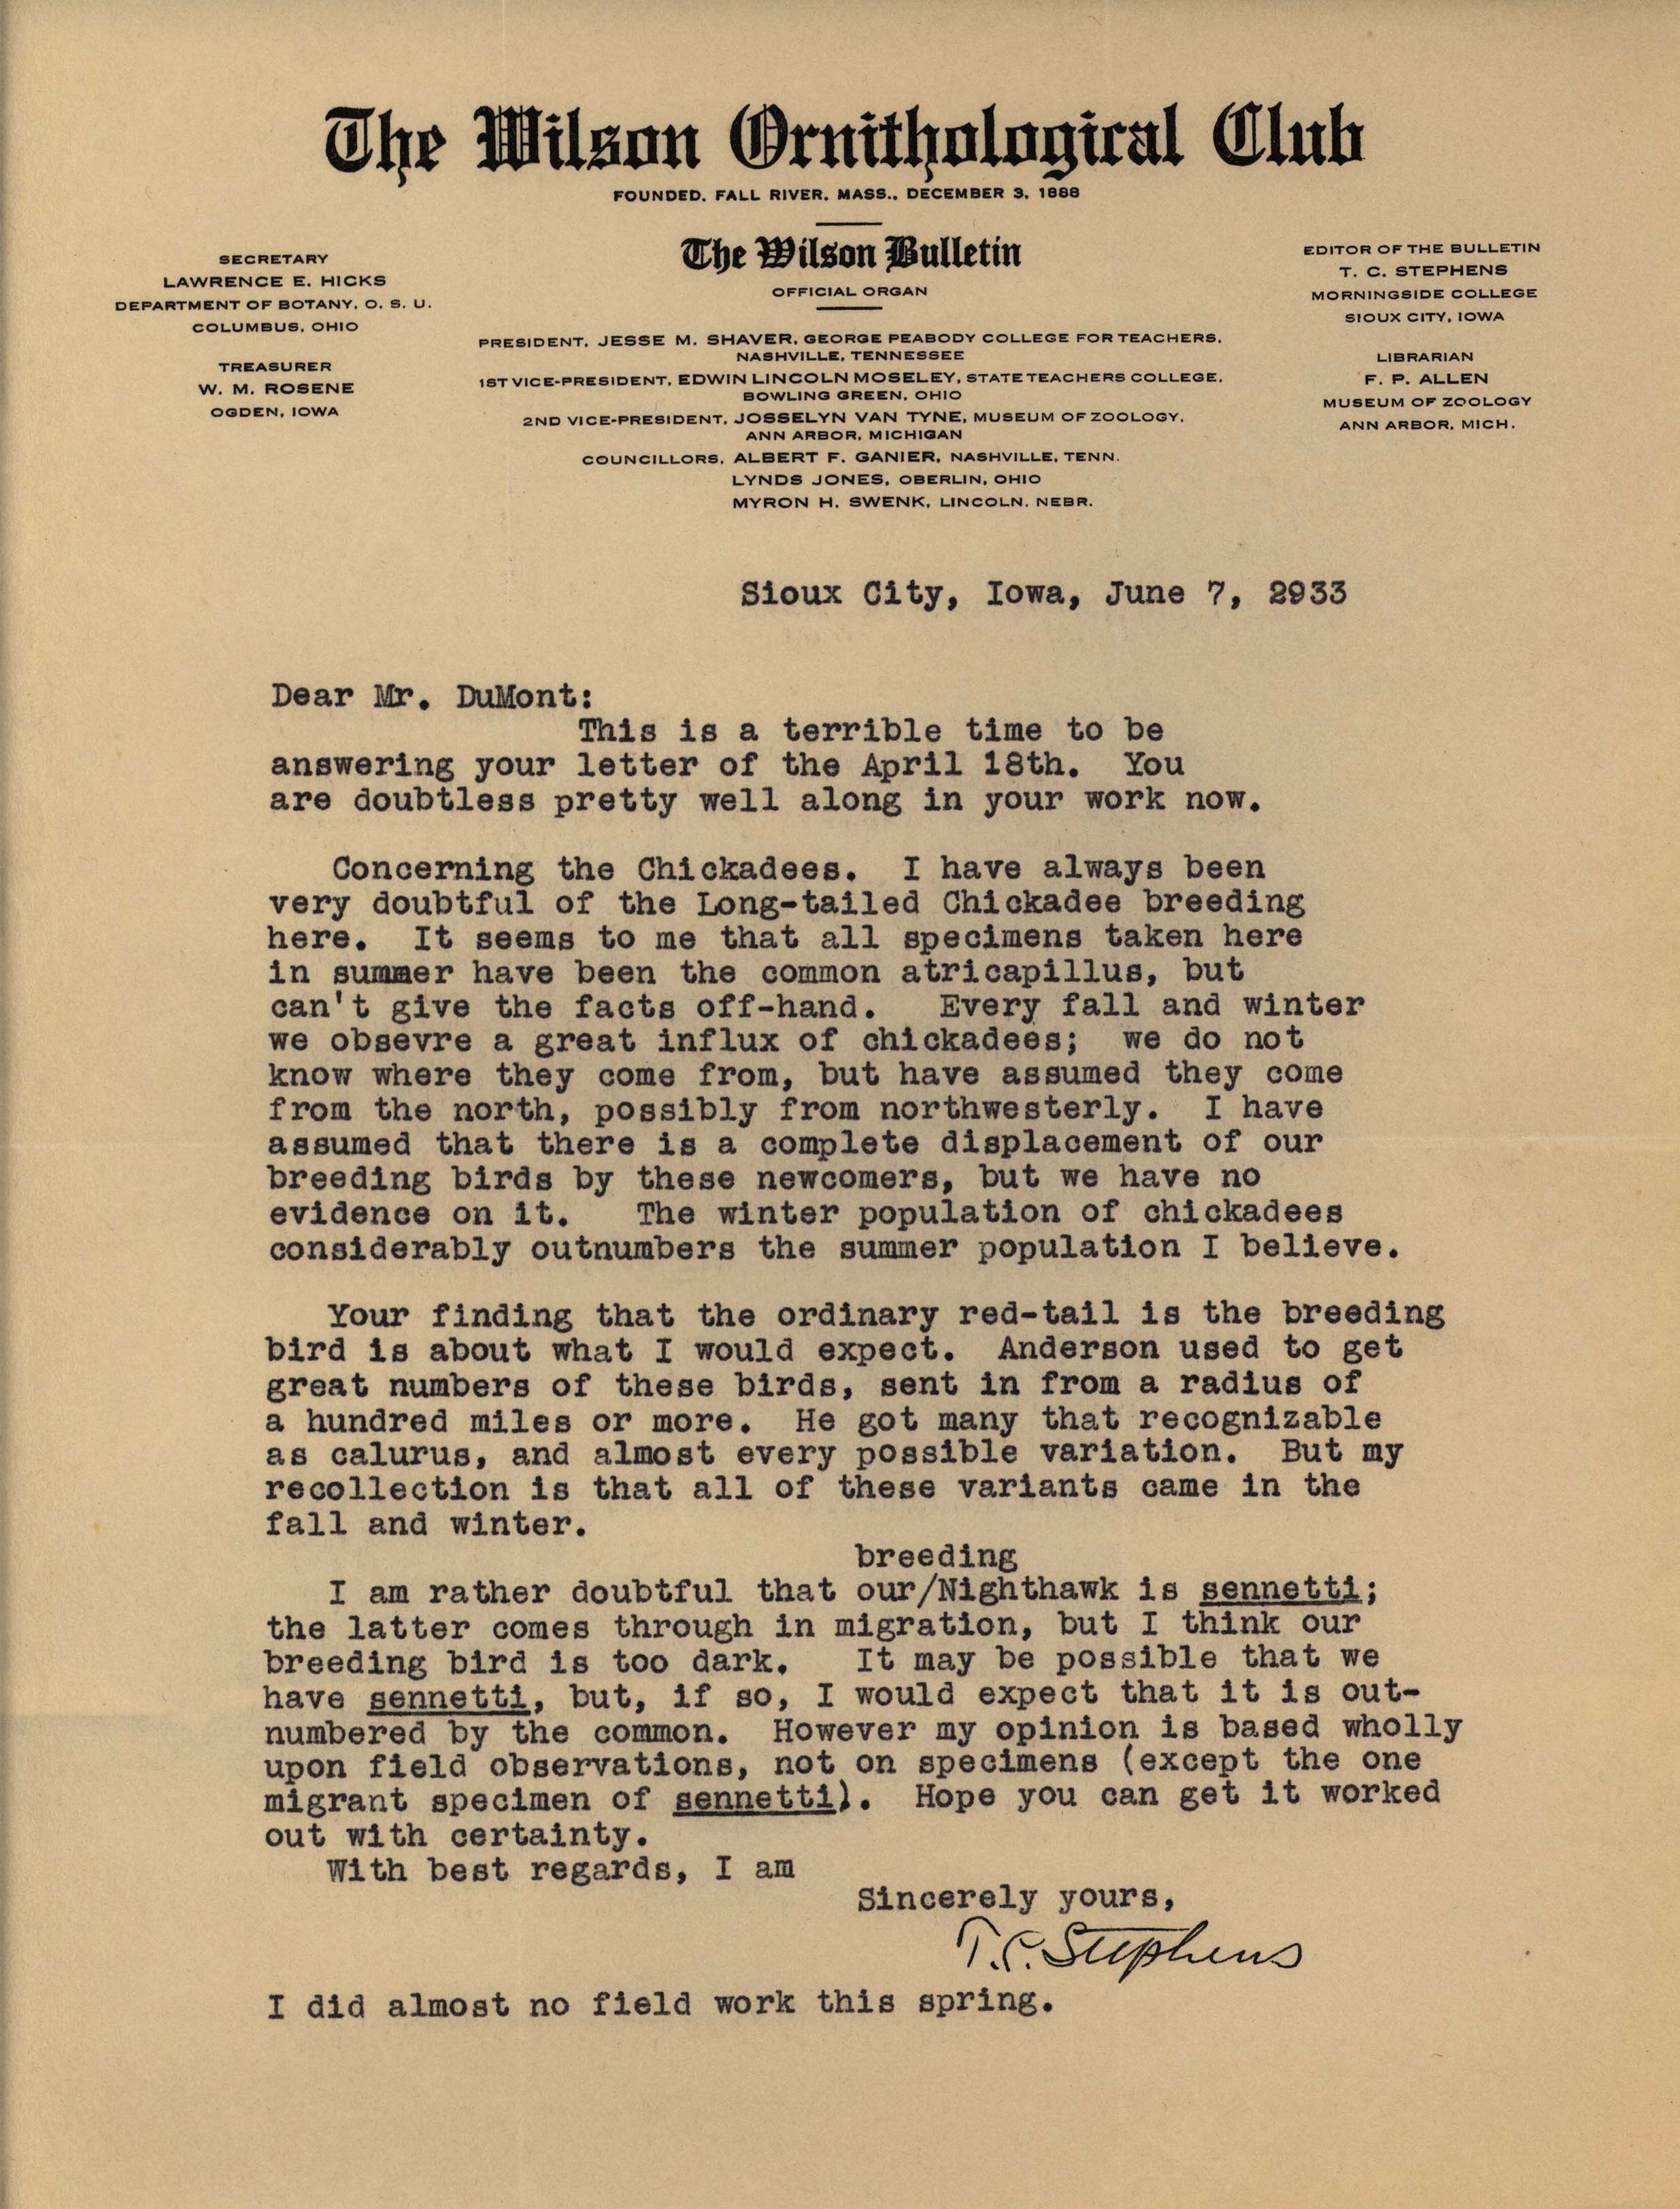 Thomas Stephens letter to Philip DuMont regarding Chickadees in Iowa, June 7, 1933